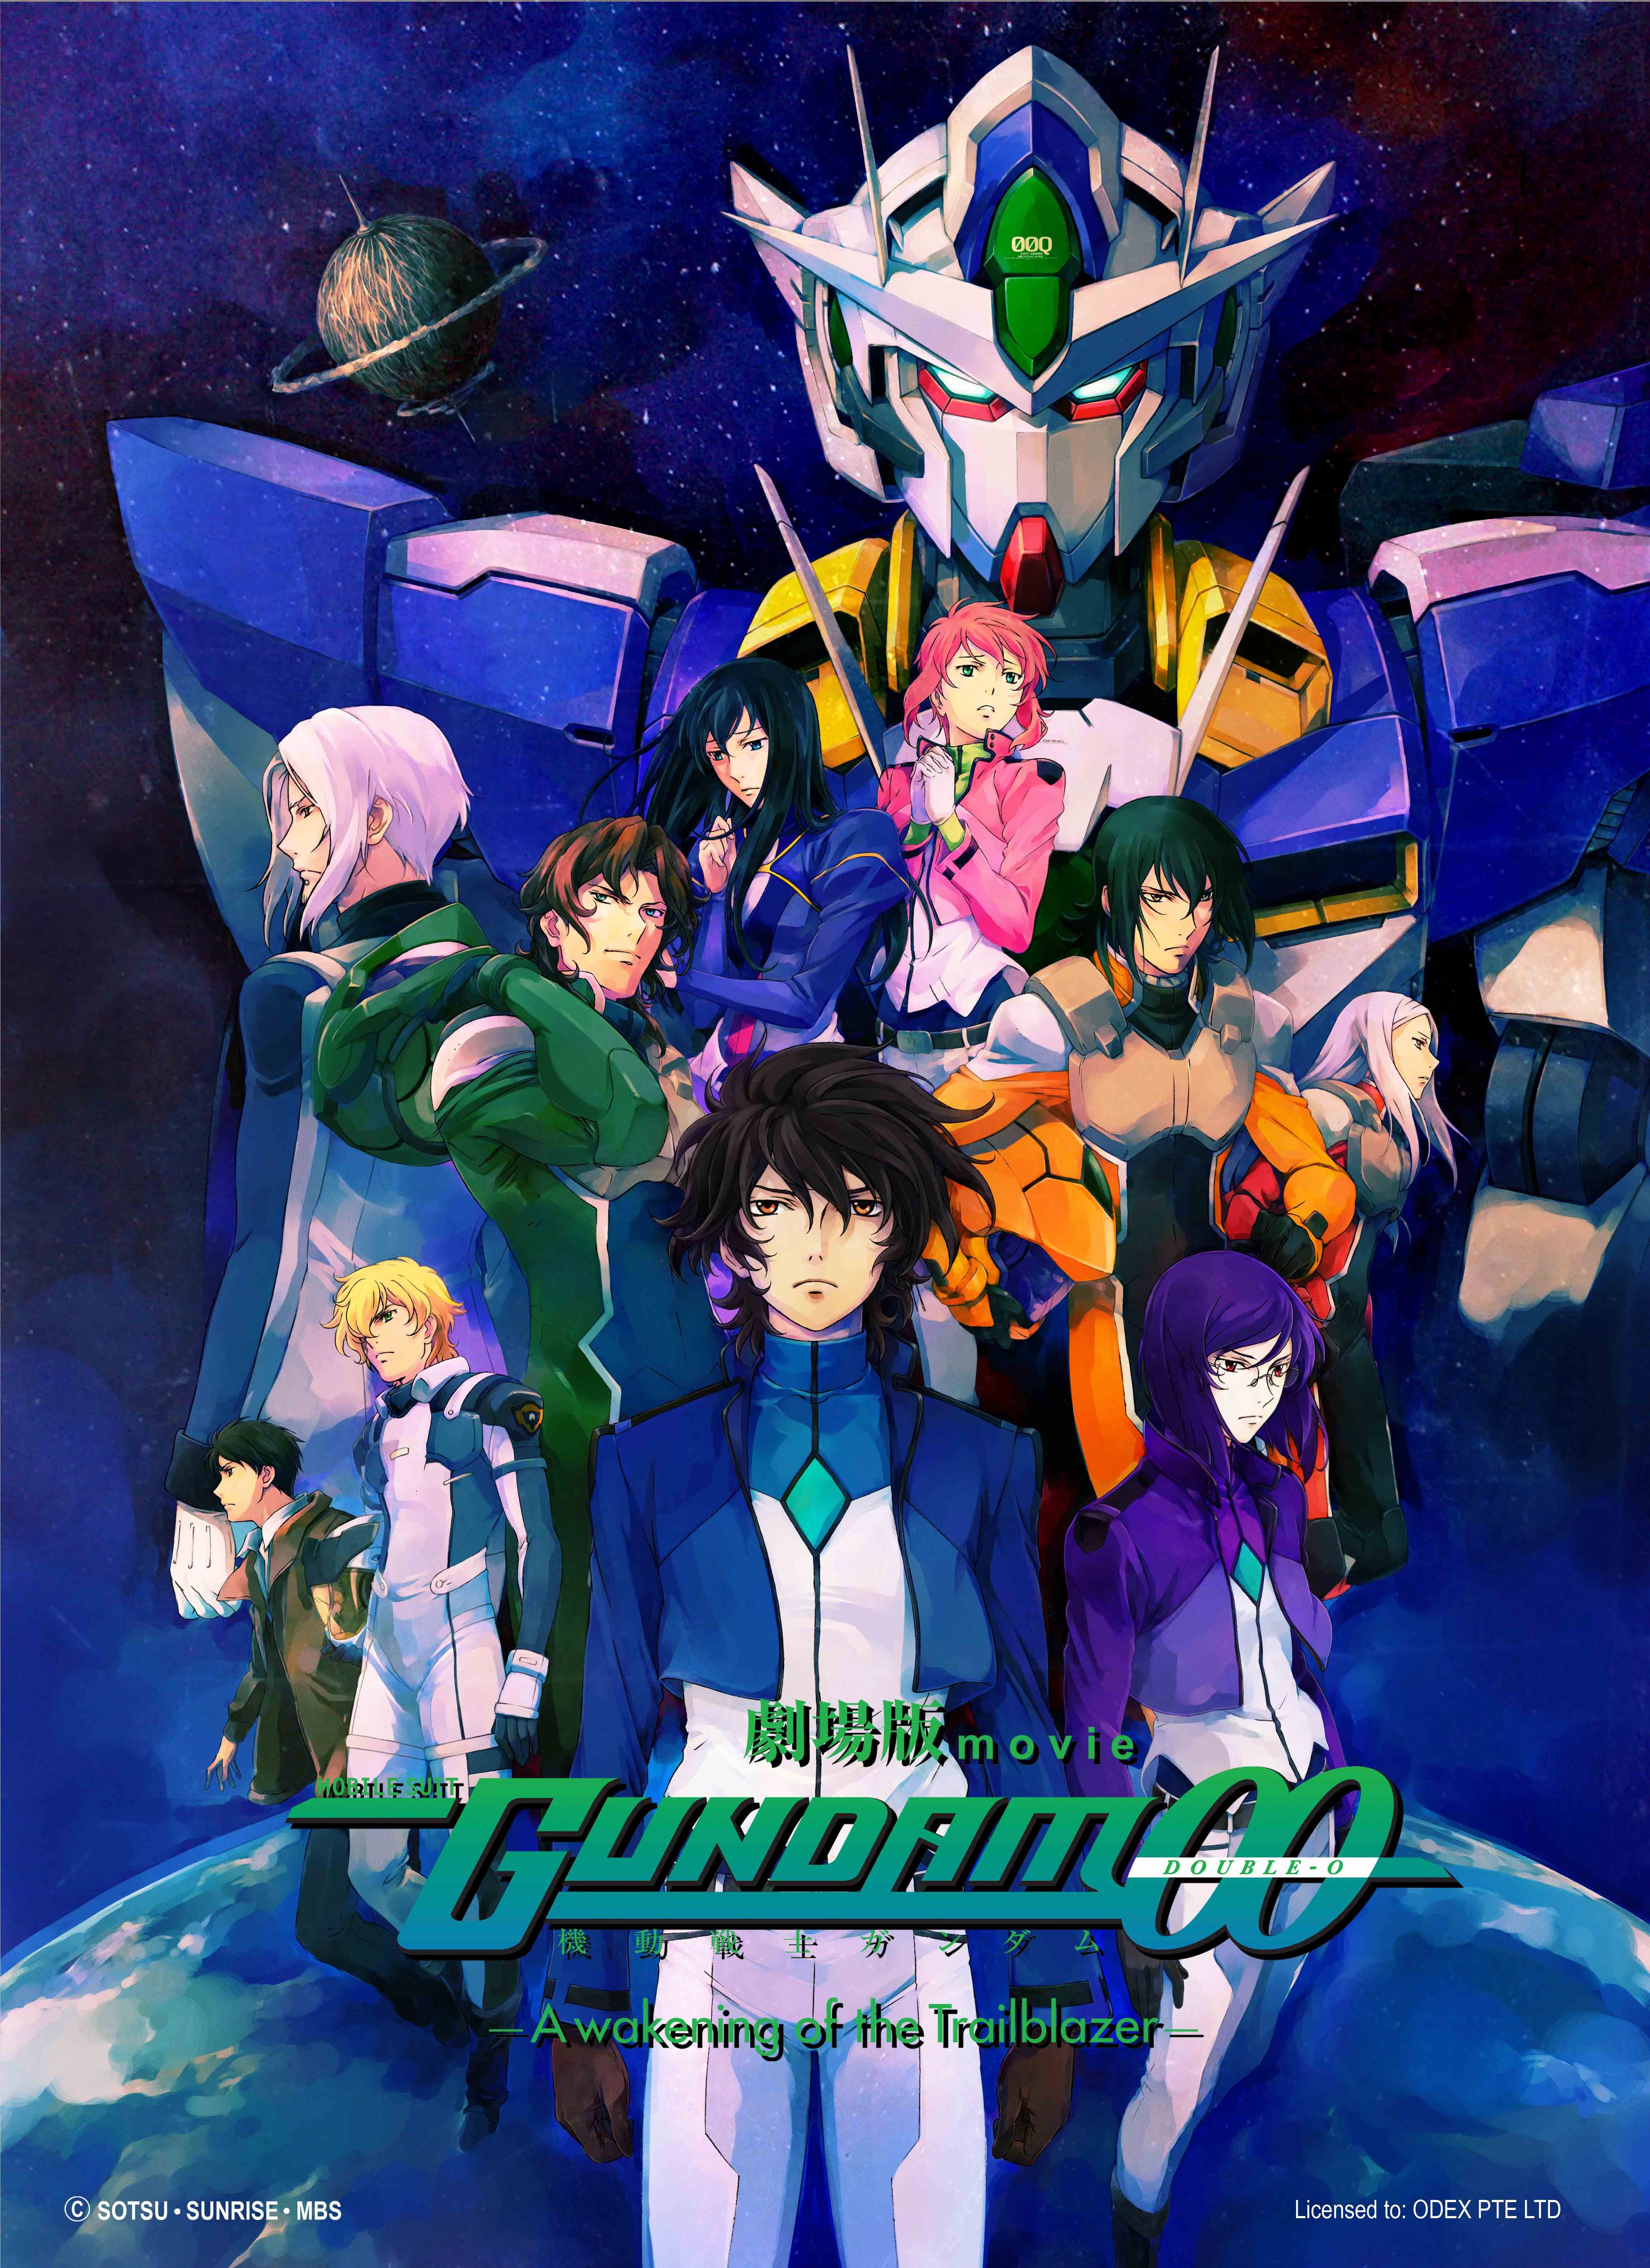 Mobile Suit Gundam The Movie: A Wakening of the Trailblazer